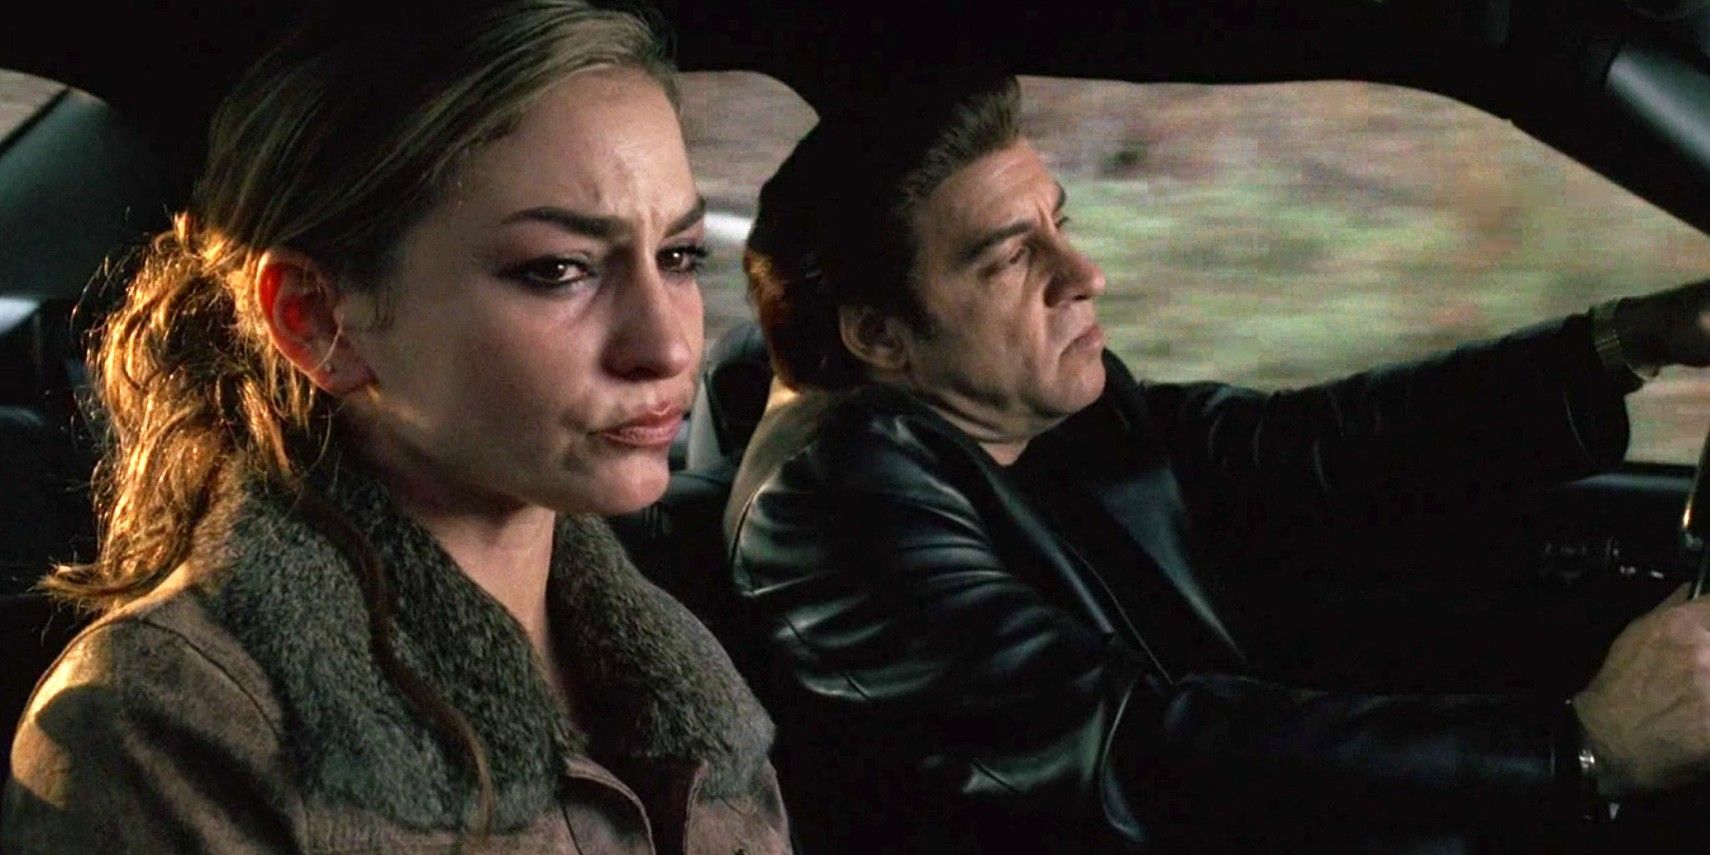 The Sopranos The 5 Funniest Episodes (& The 5 Most Disturbing)